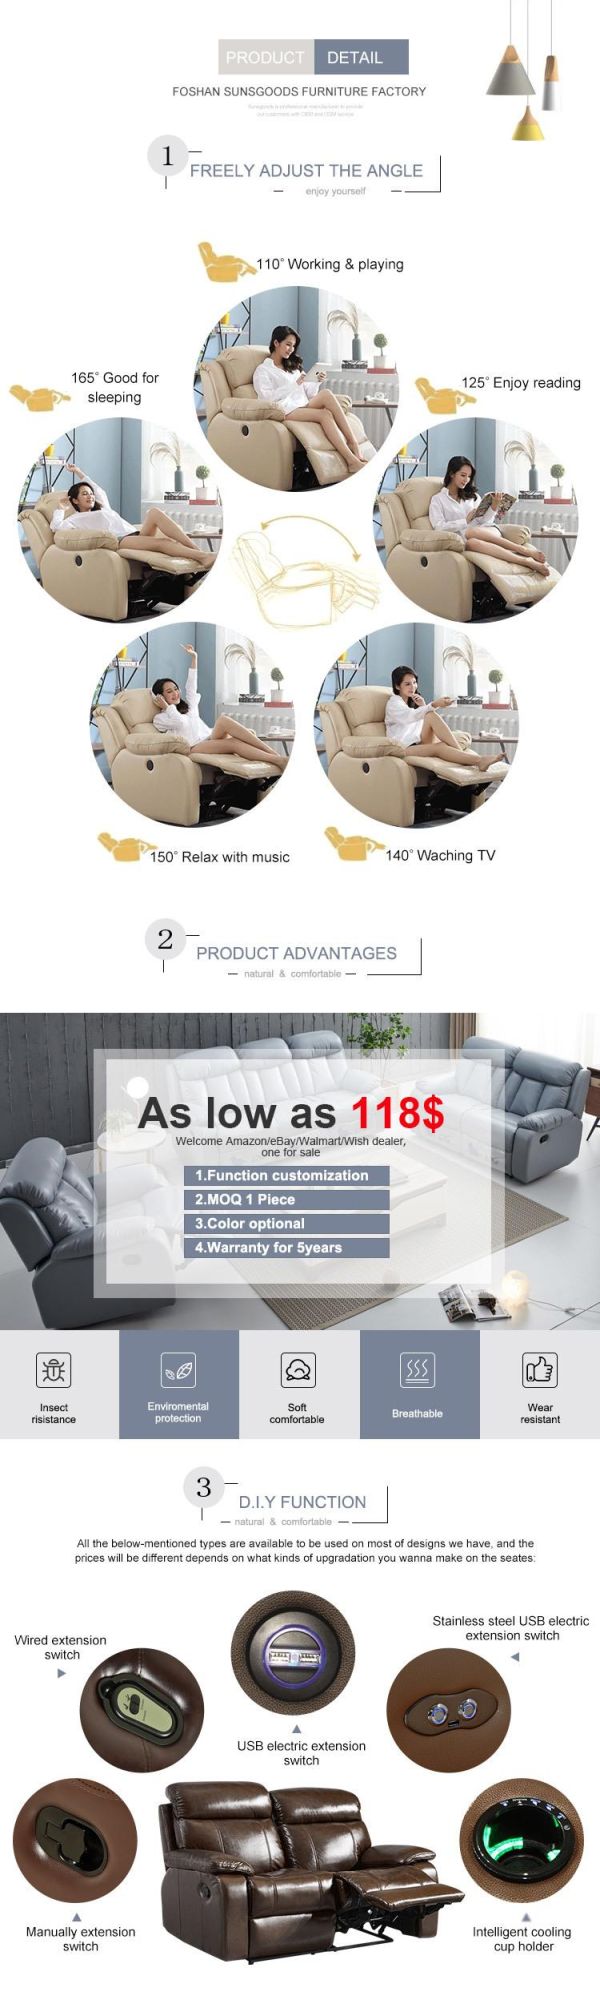 B209 Luxury Relax Furniture Lazy Boy Lift Manual Recliner Swivel Rocker Chair